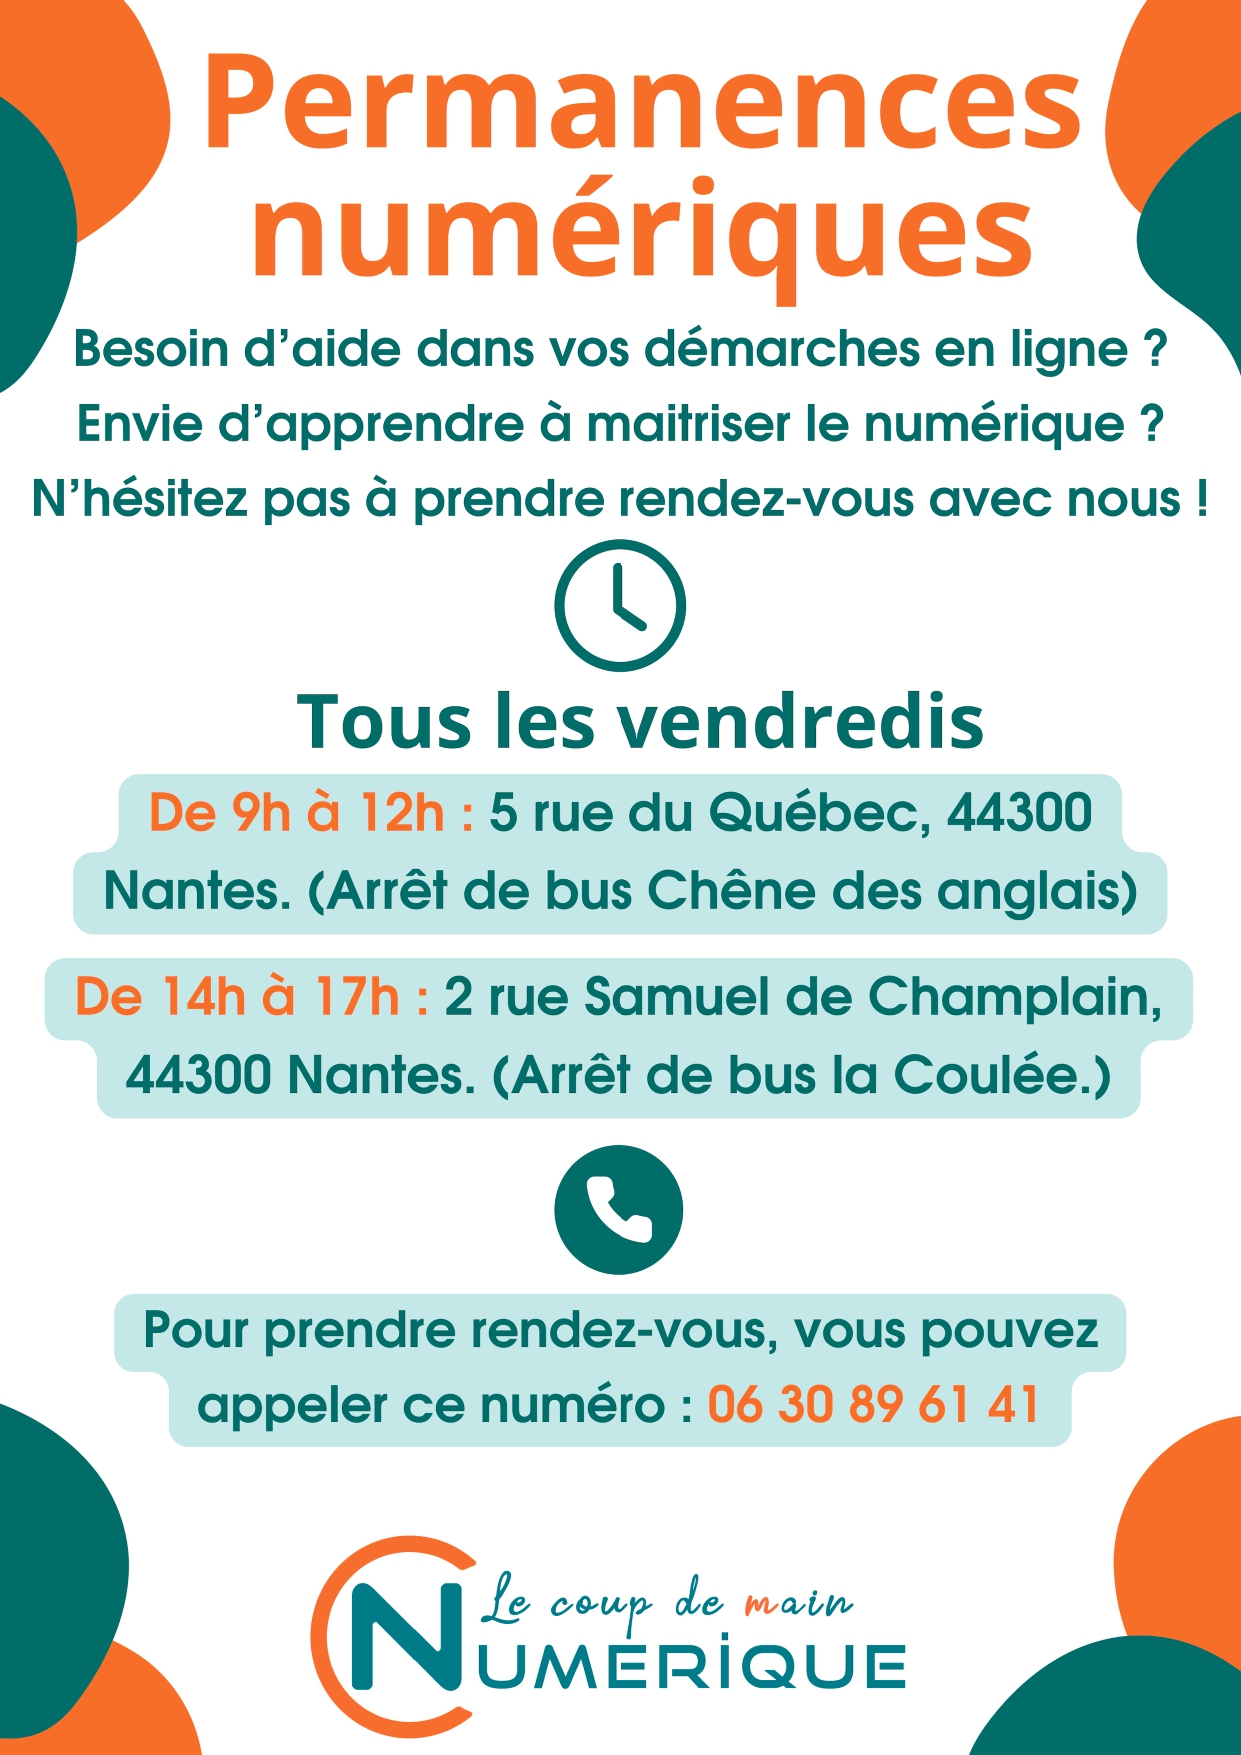 Communication permanences bailleurs Nantes Nord (002)_page-0001.jpg